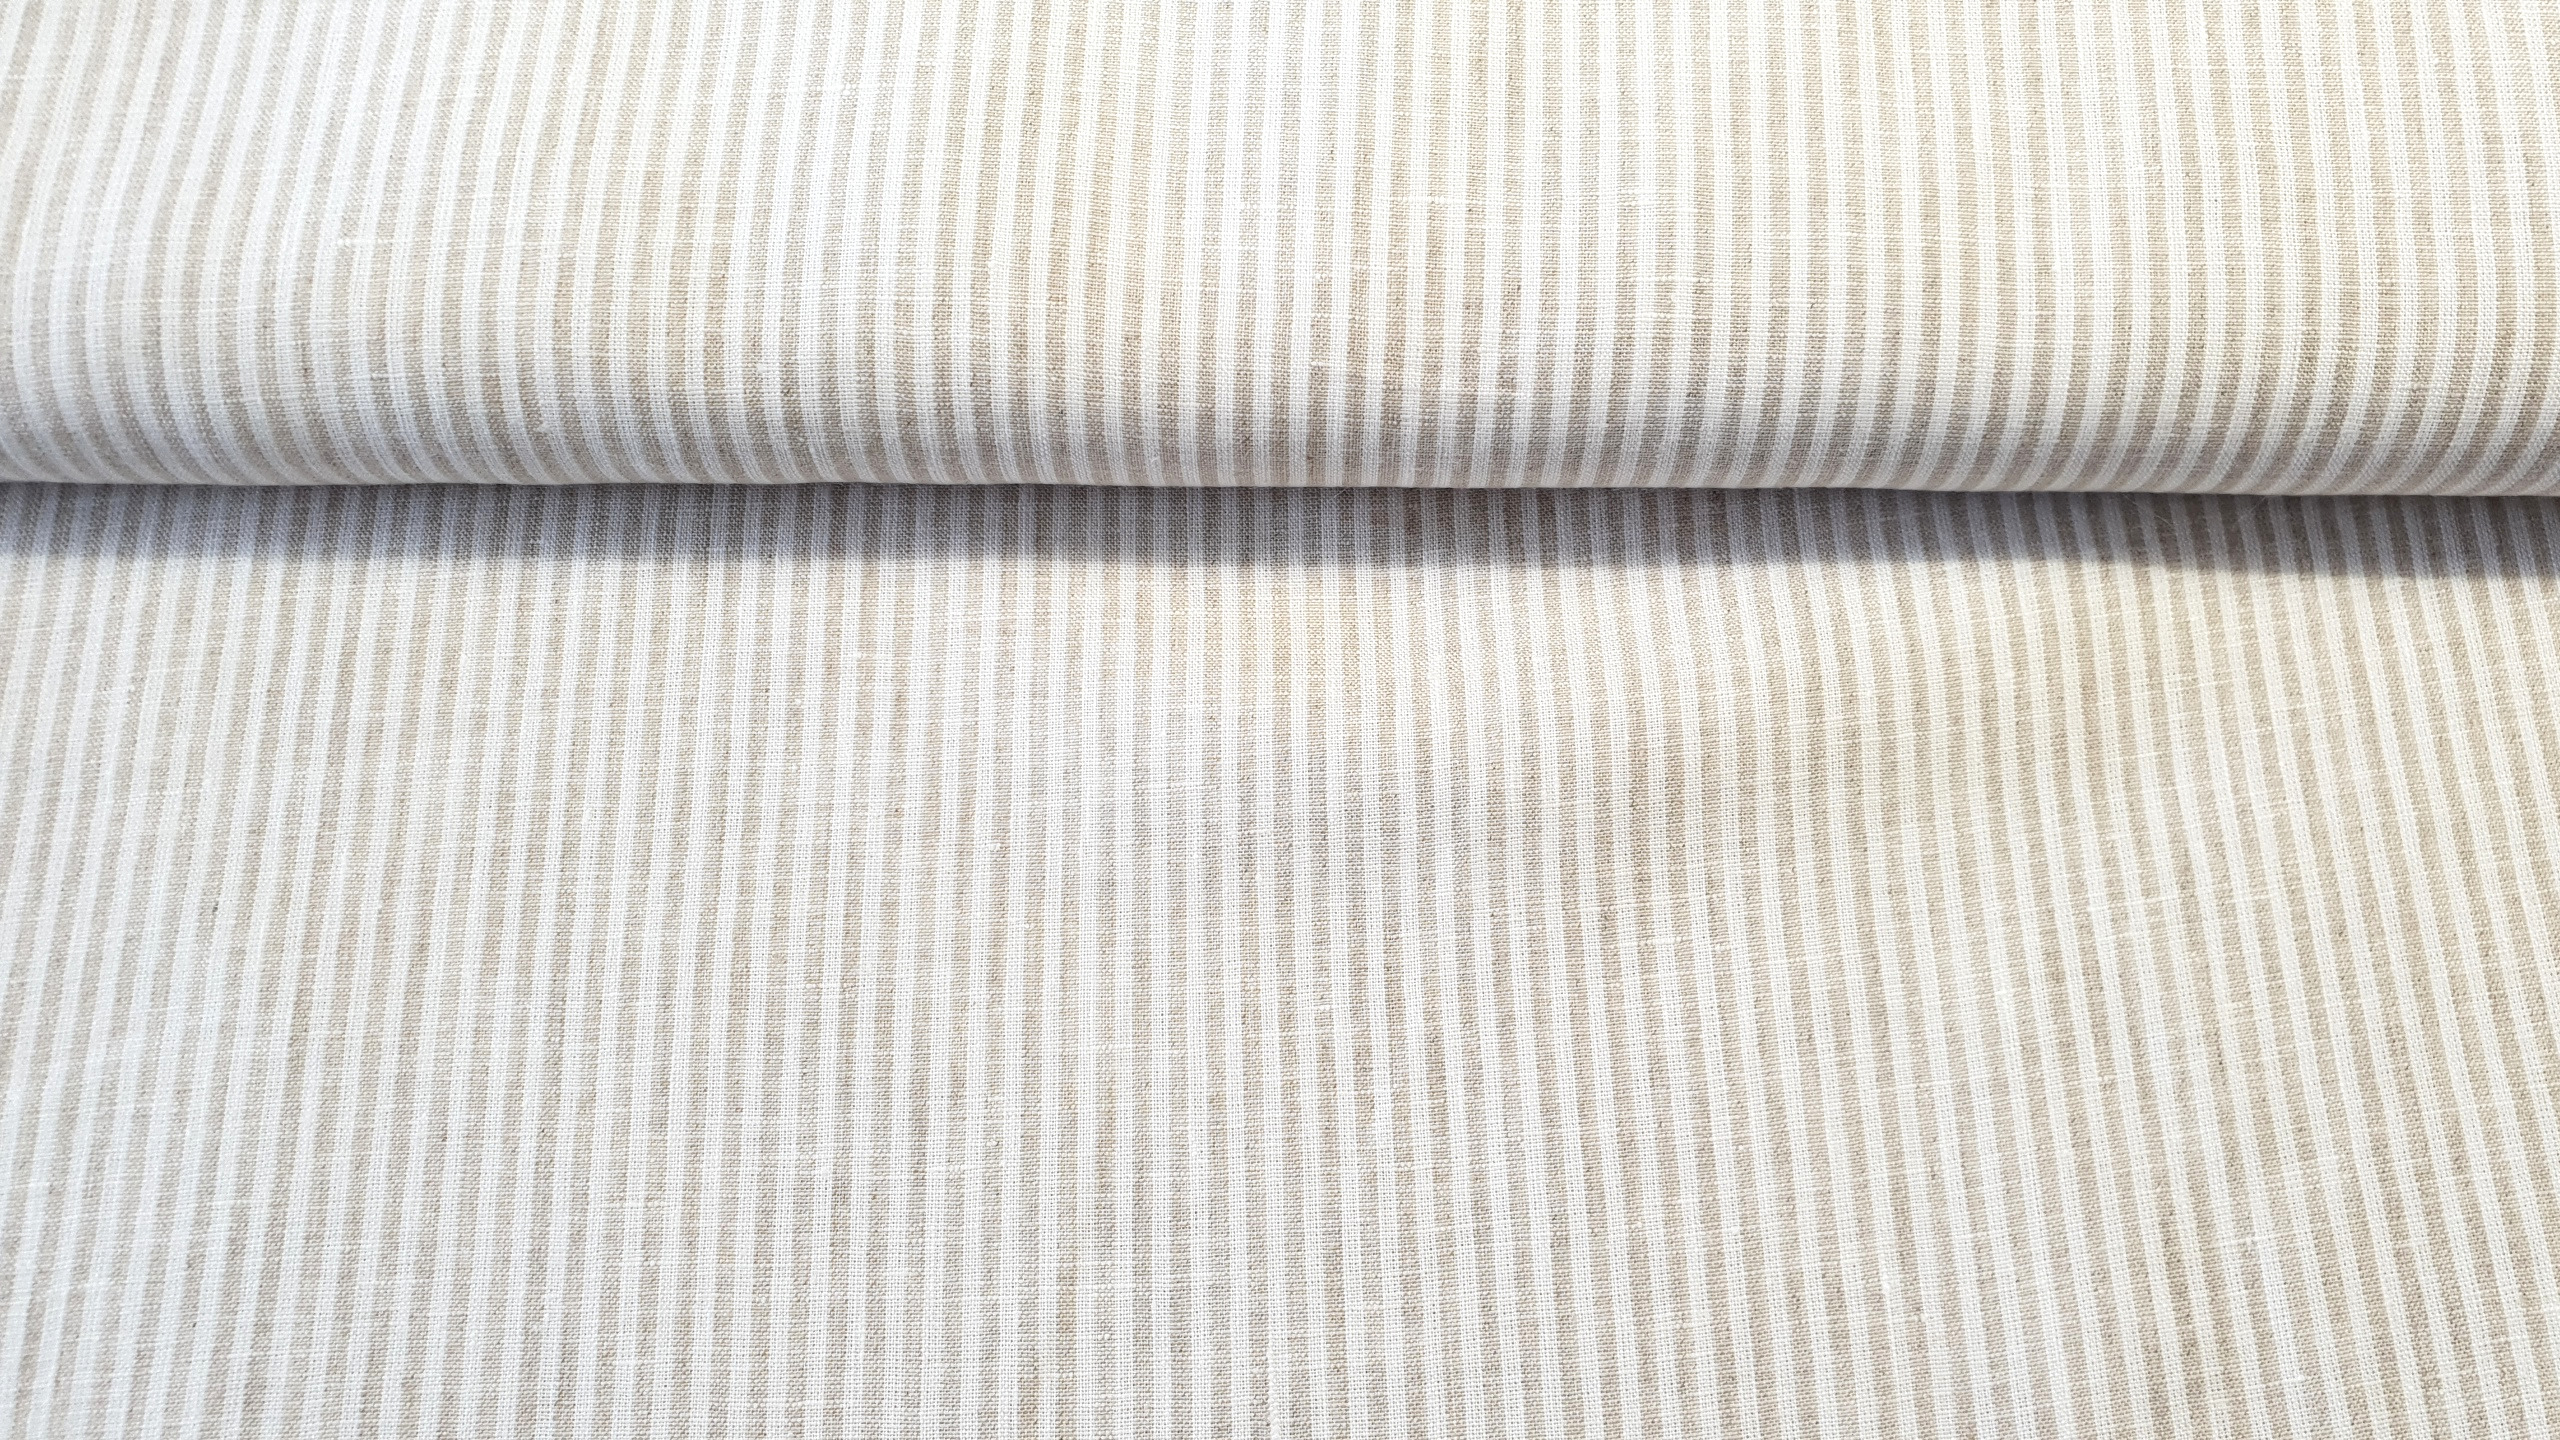 Striped linen- small natural white